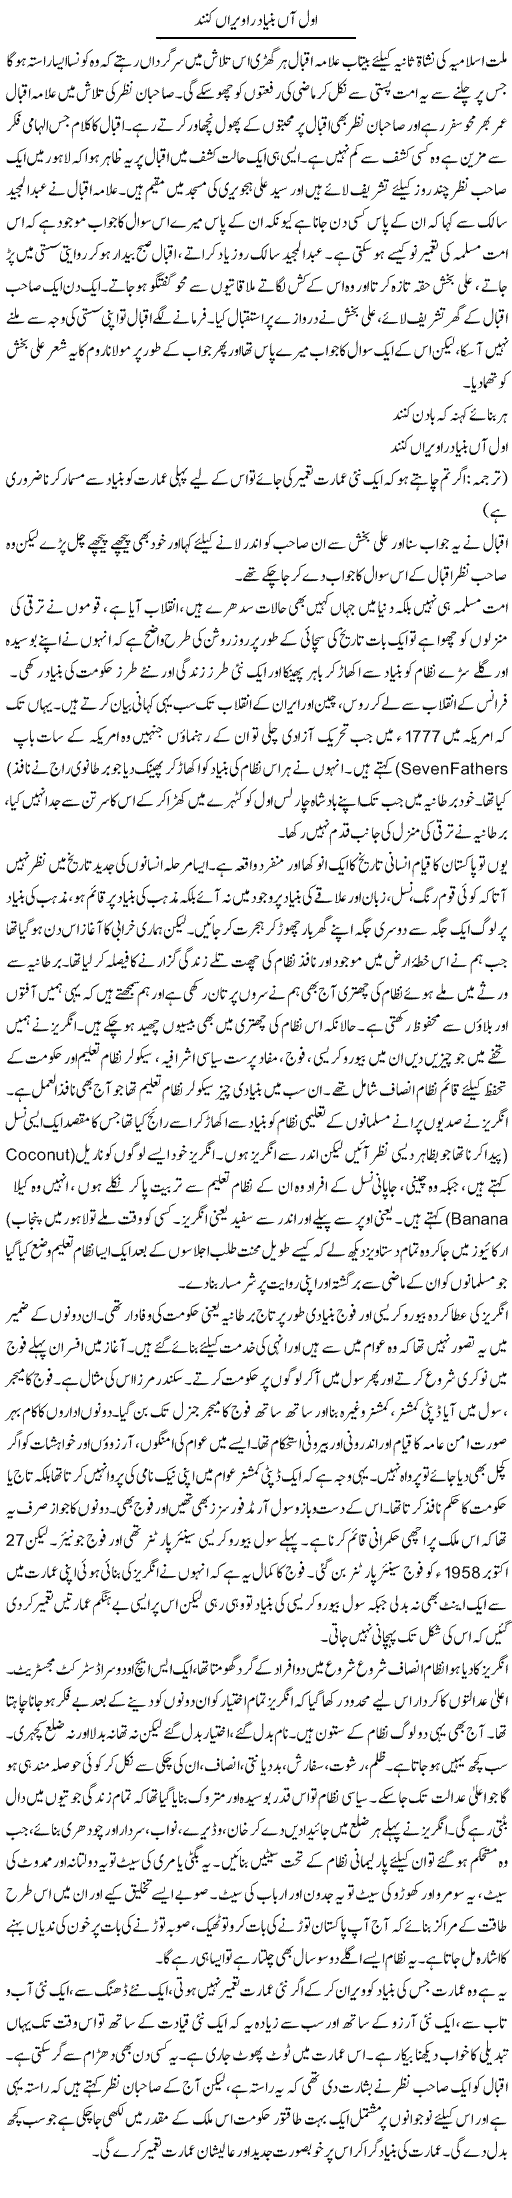 Awwal Aan Bunyad Ra Veeran Kund | Orya Maqbool Jan | Daily Urdu Columns